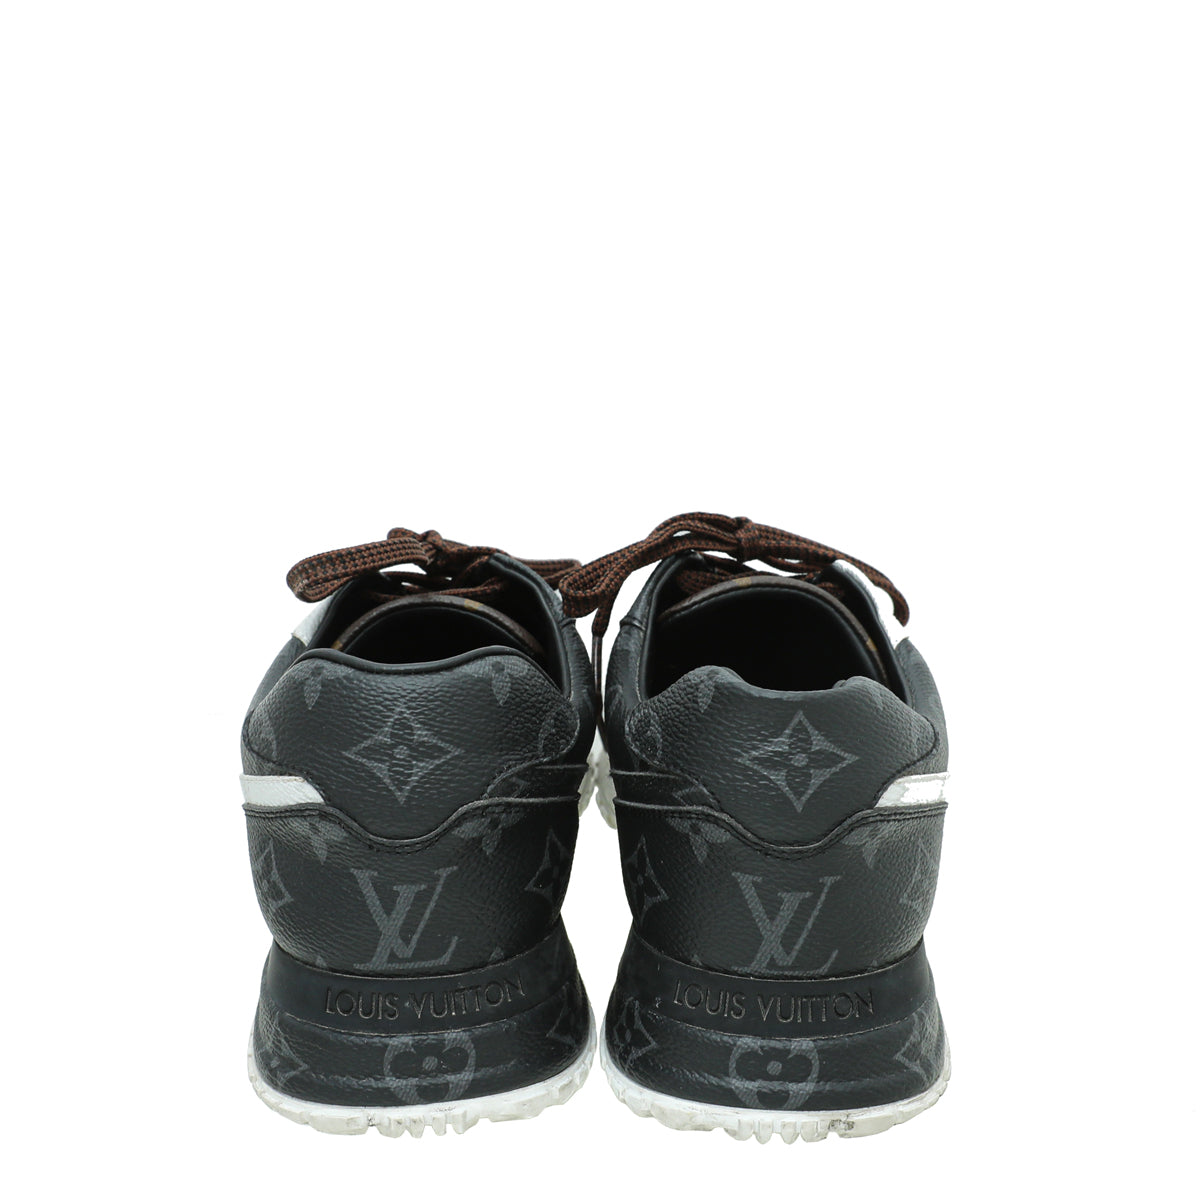 LOUIS VUITTON Monogram Time Out Sneakers 39 Black 1258862